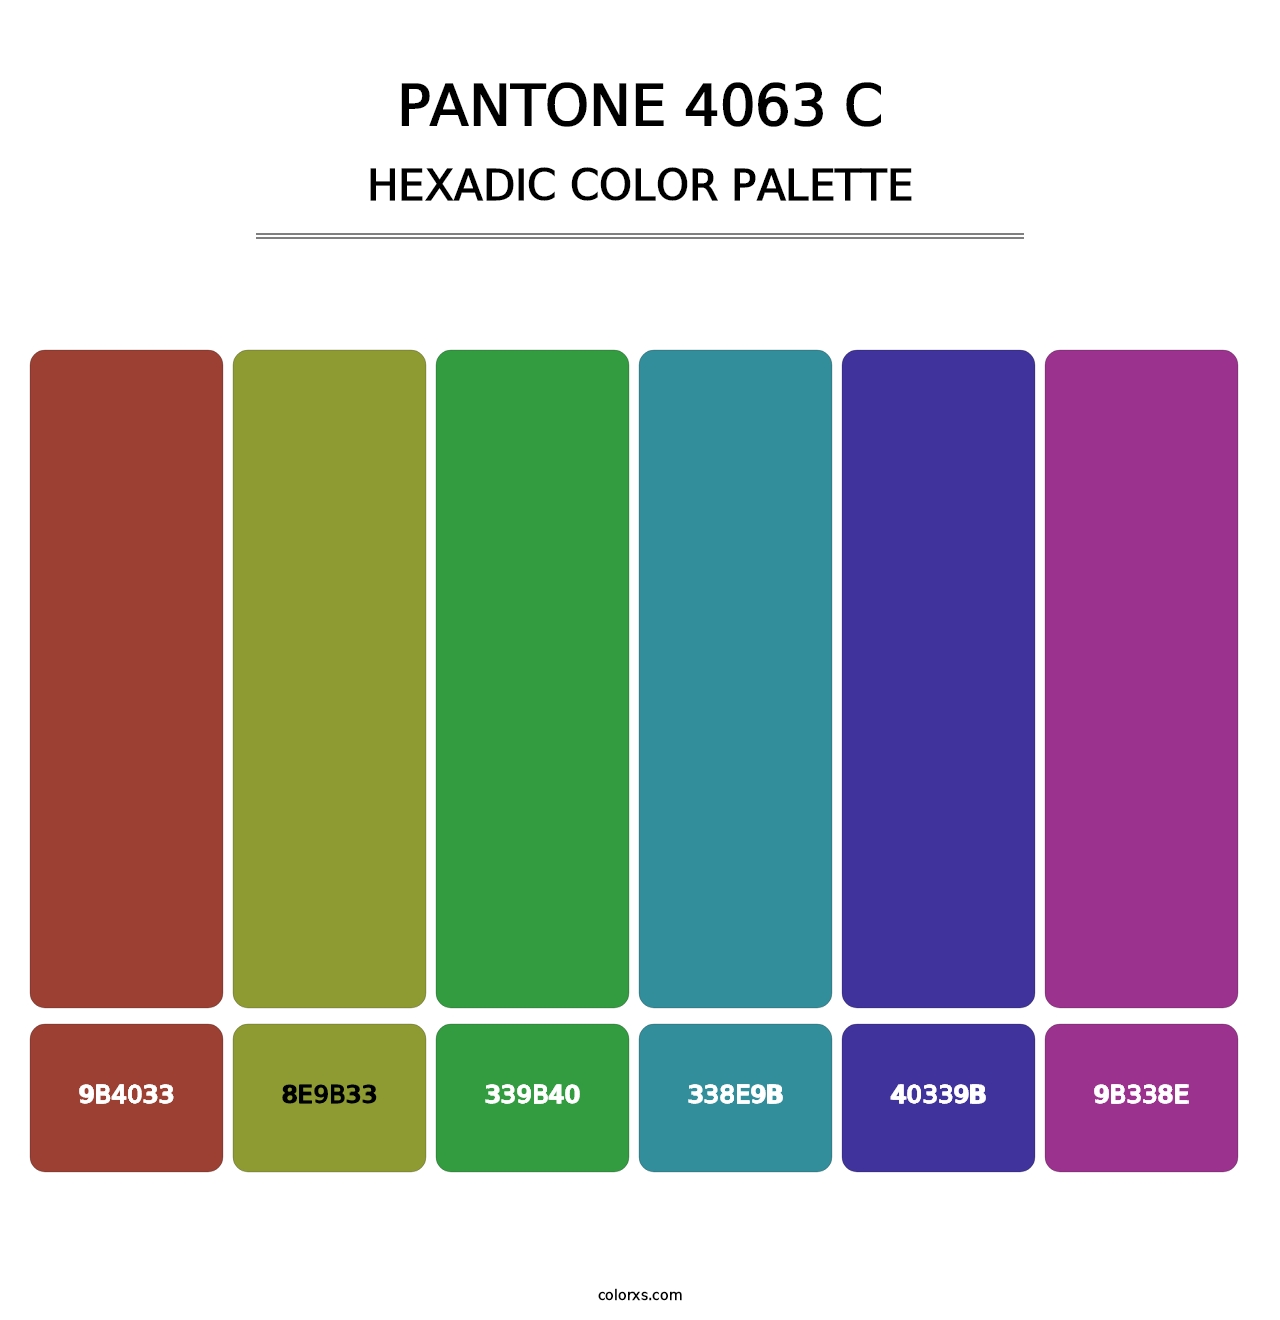 PANTONE 4063 C - Hexadic Color Palette